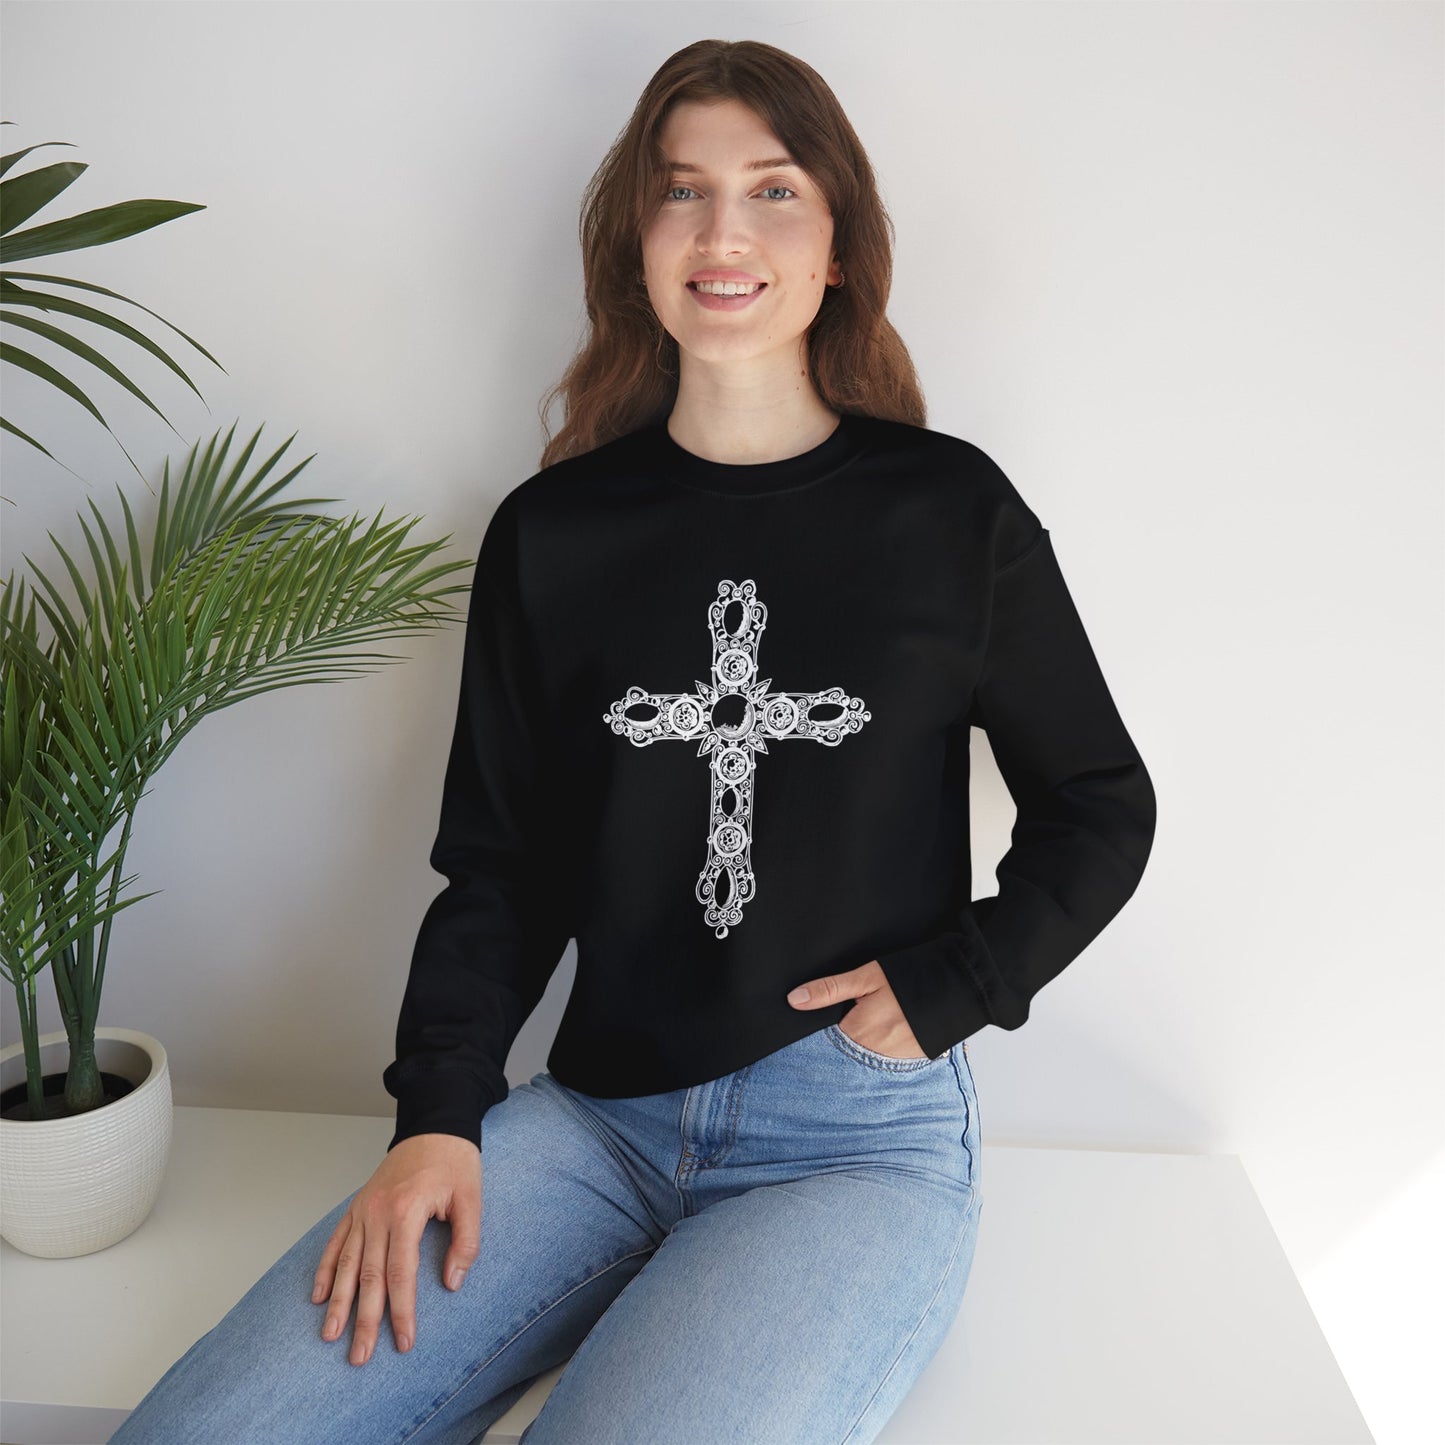 Vintage Cross Sweatshirt